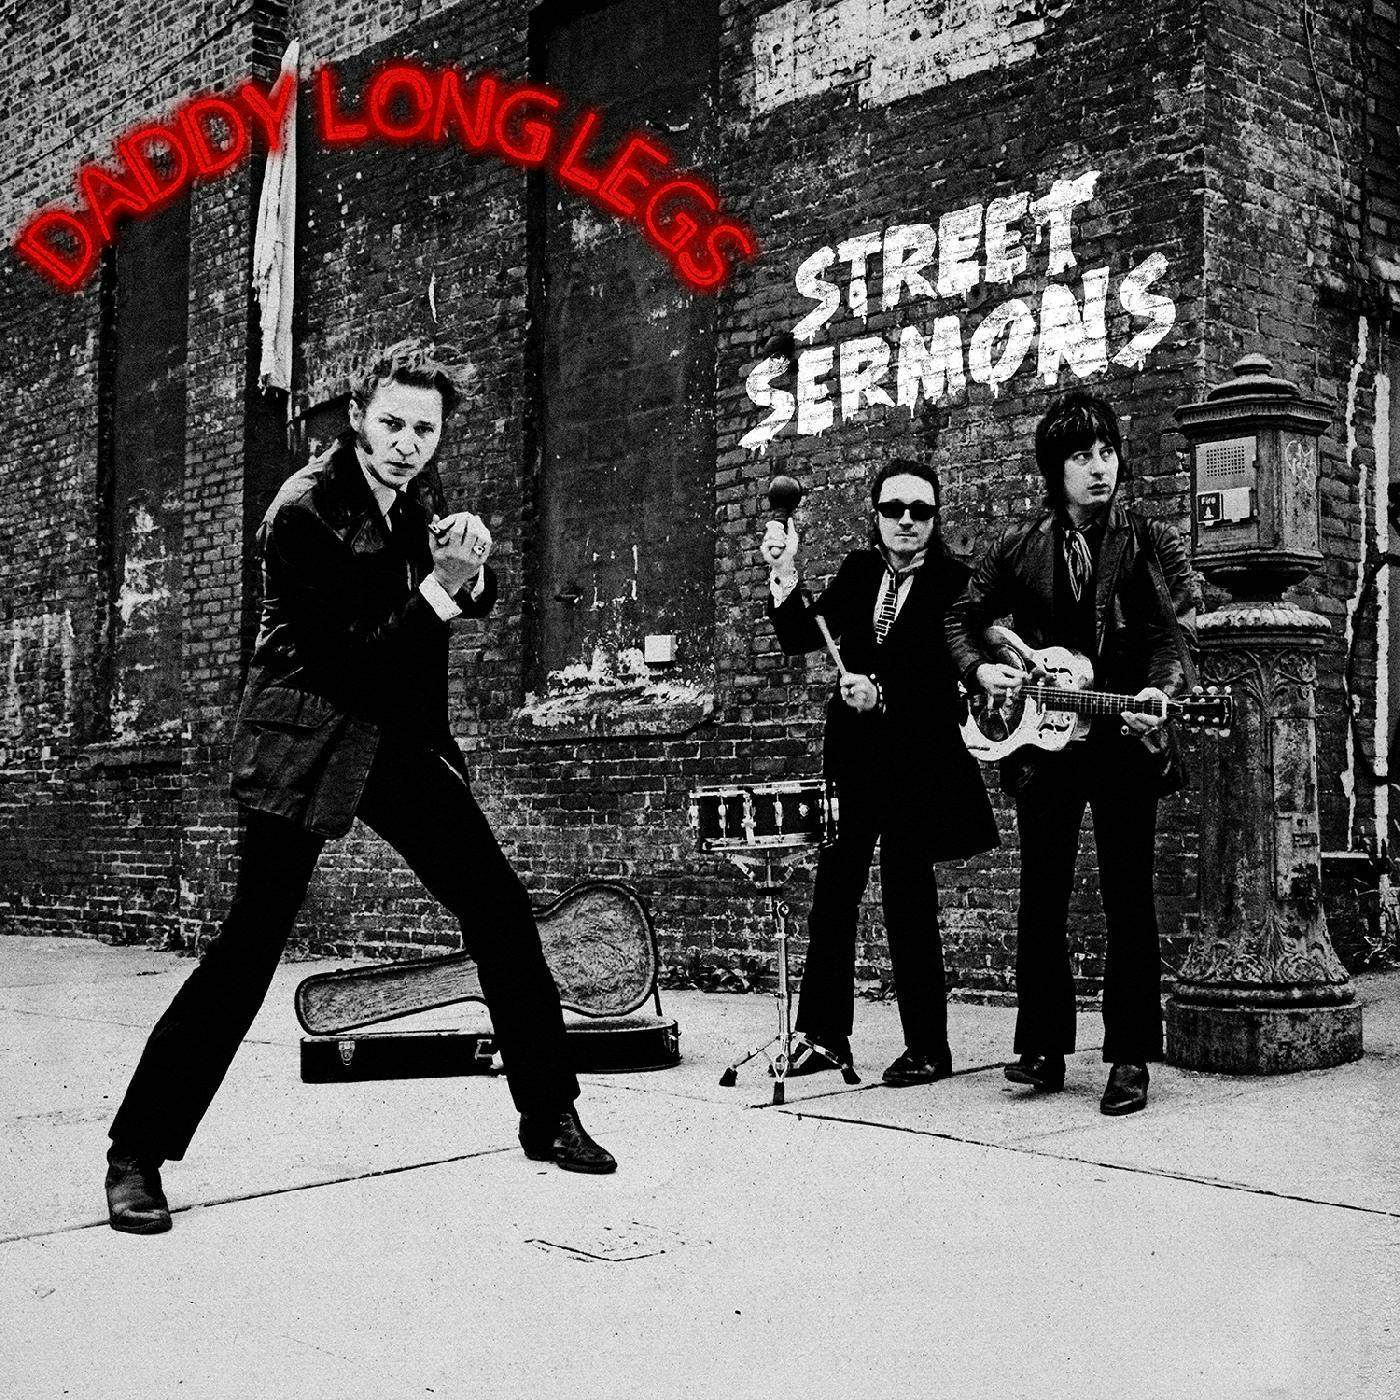 DADDY LONG LEGS STREET SERMONS (RED VINYL) Vinyl Record